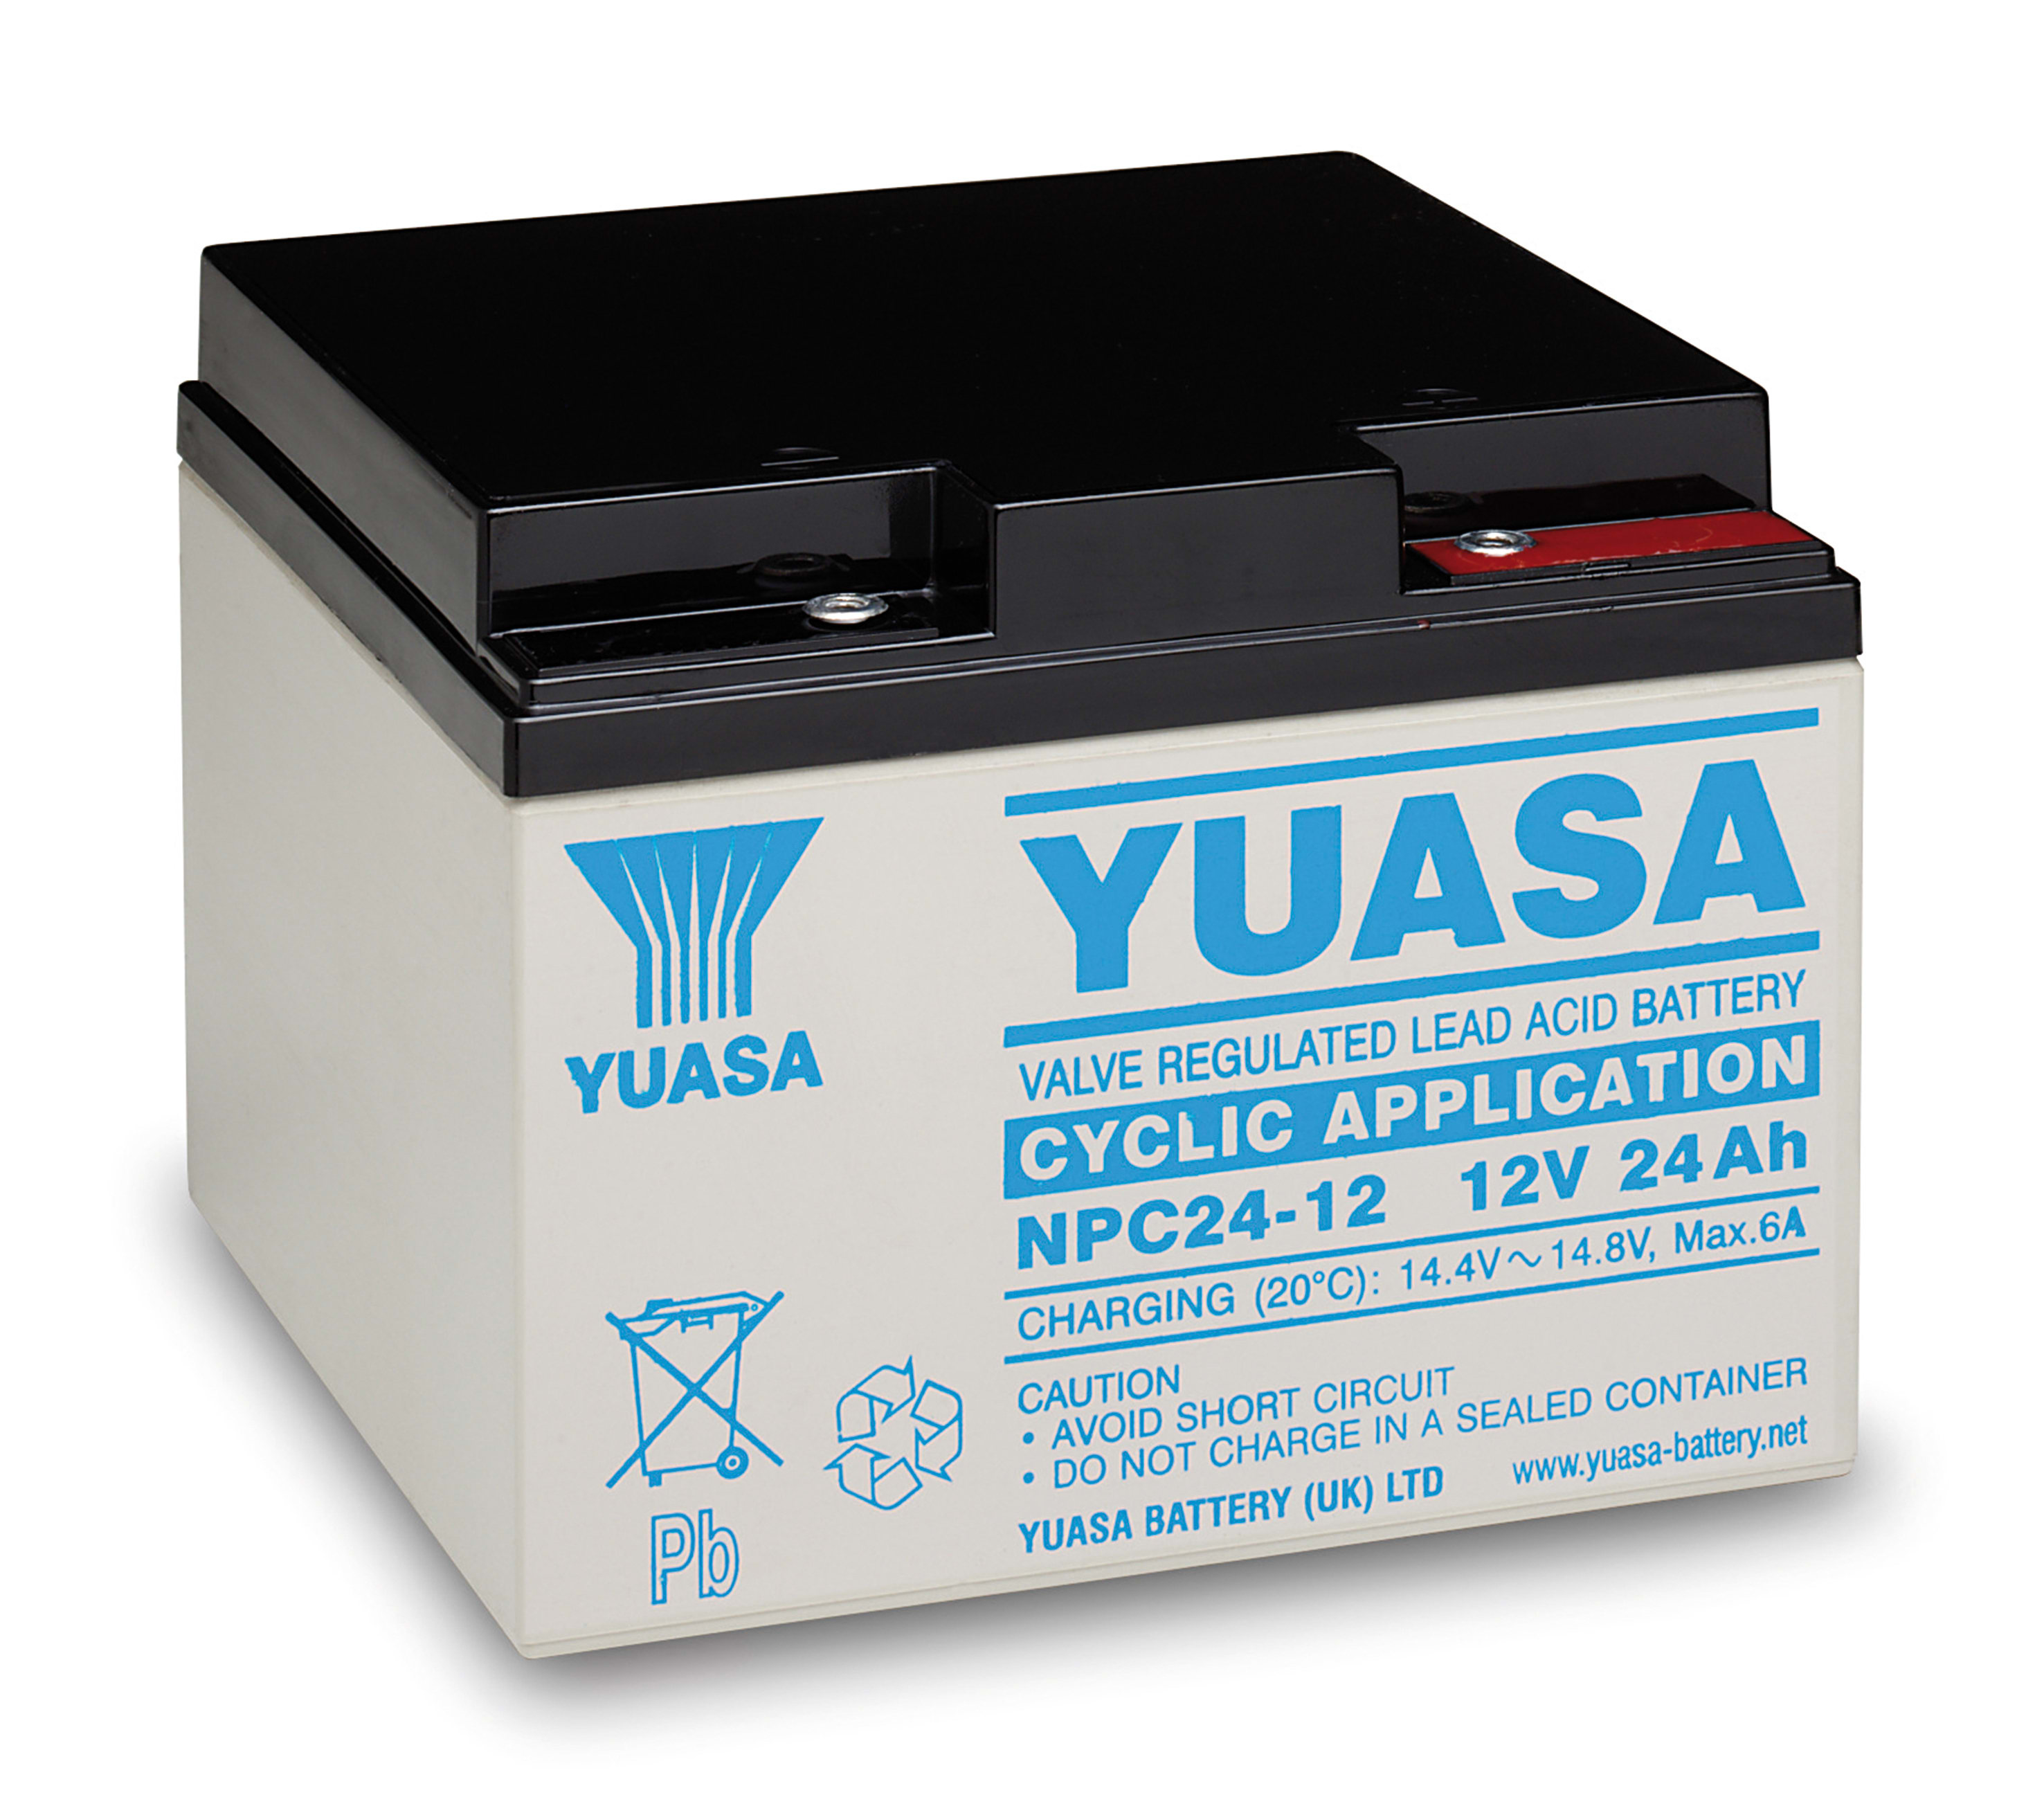 Ми аккумулятор купить. Аккумуляторная батарея Yuasa np24-12i. Аккумуляторы Yuasa swl1100 -40a. Аккумулятор для электромобиля 12v. Прозрачные АКБ.